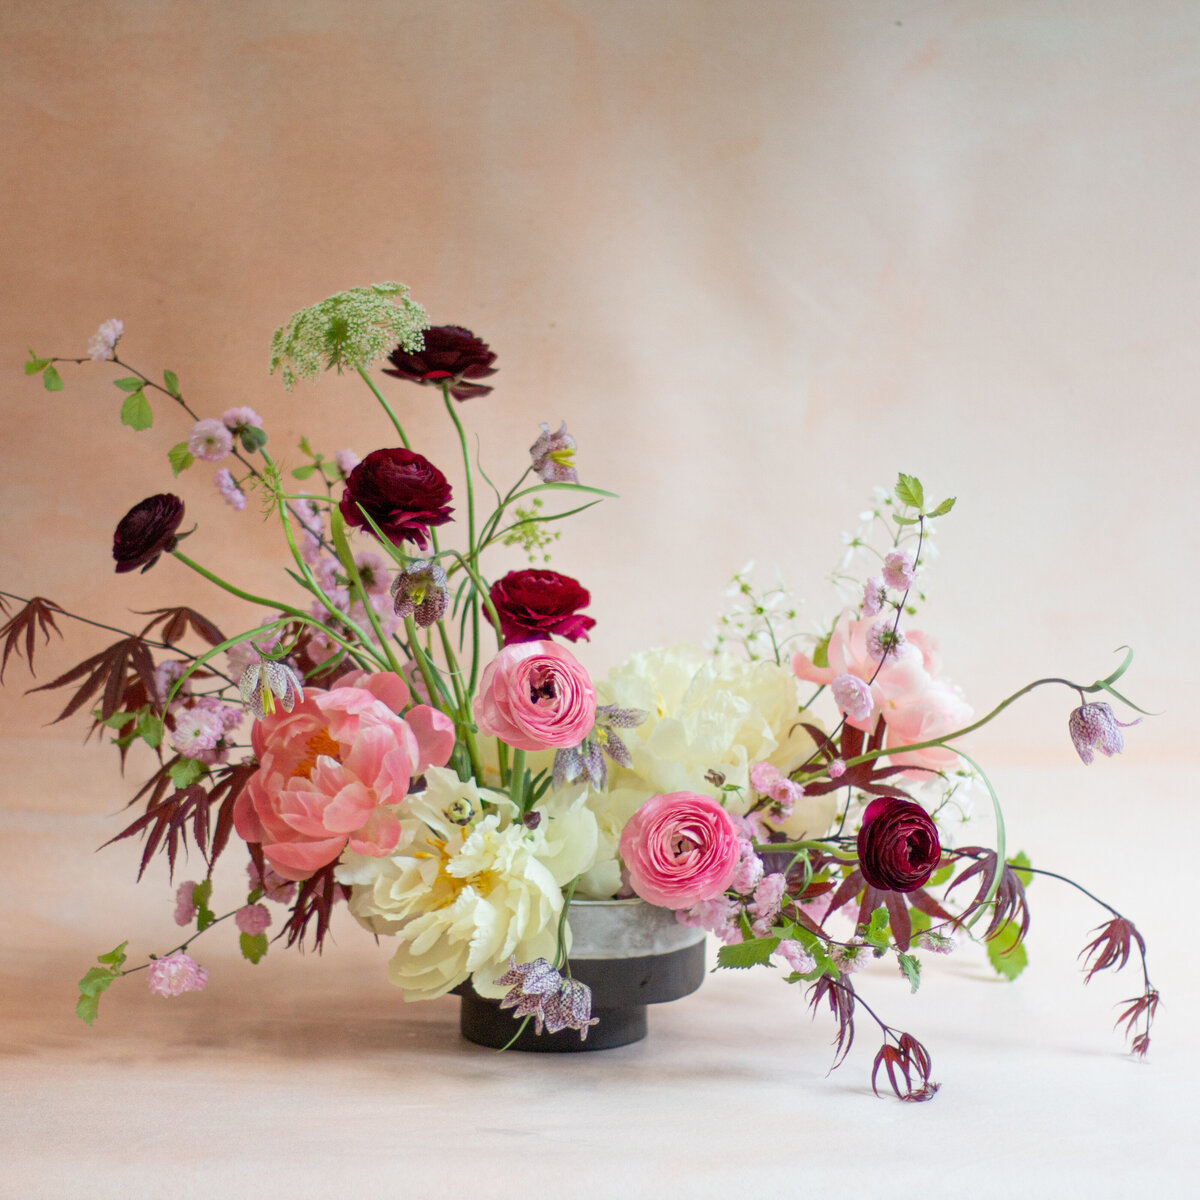 Atelier-Carmel-Wedding-Florist-GALLERY-Arrangements-41